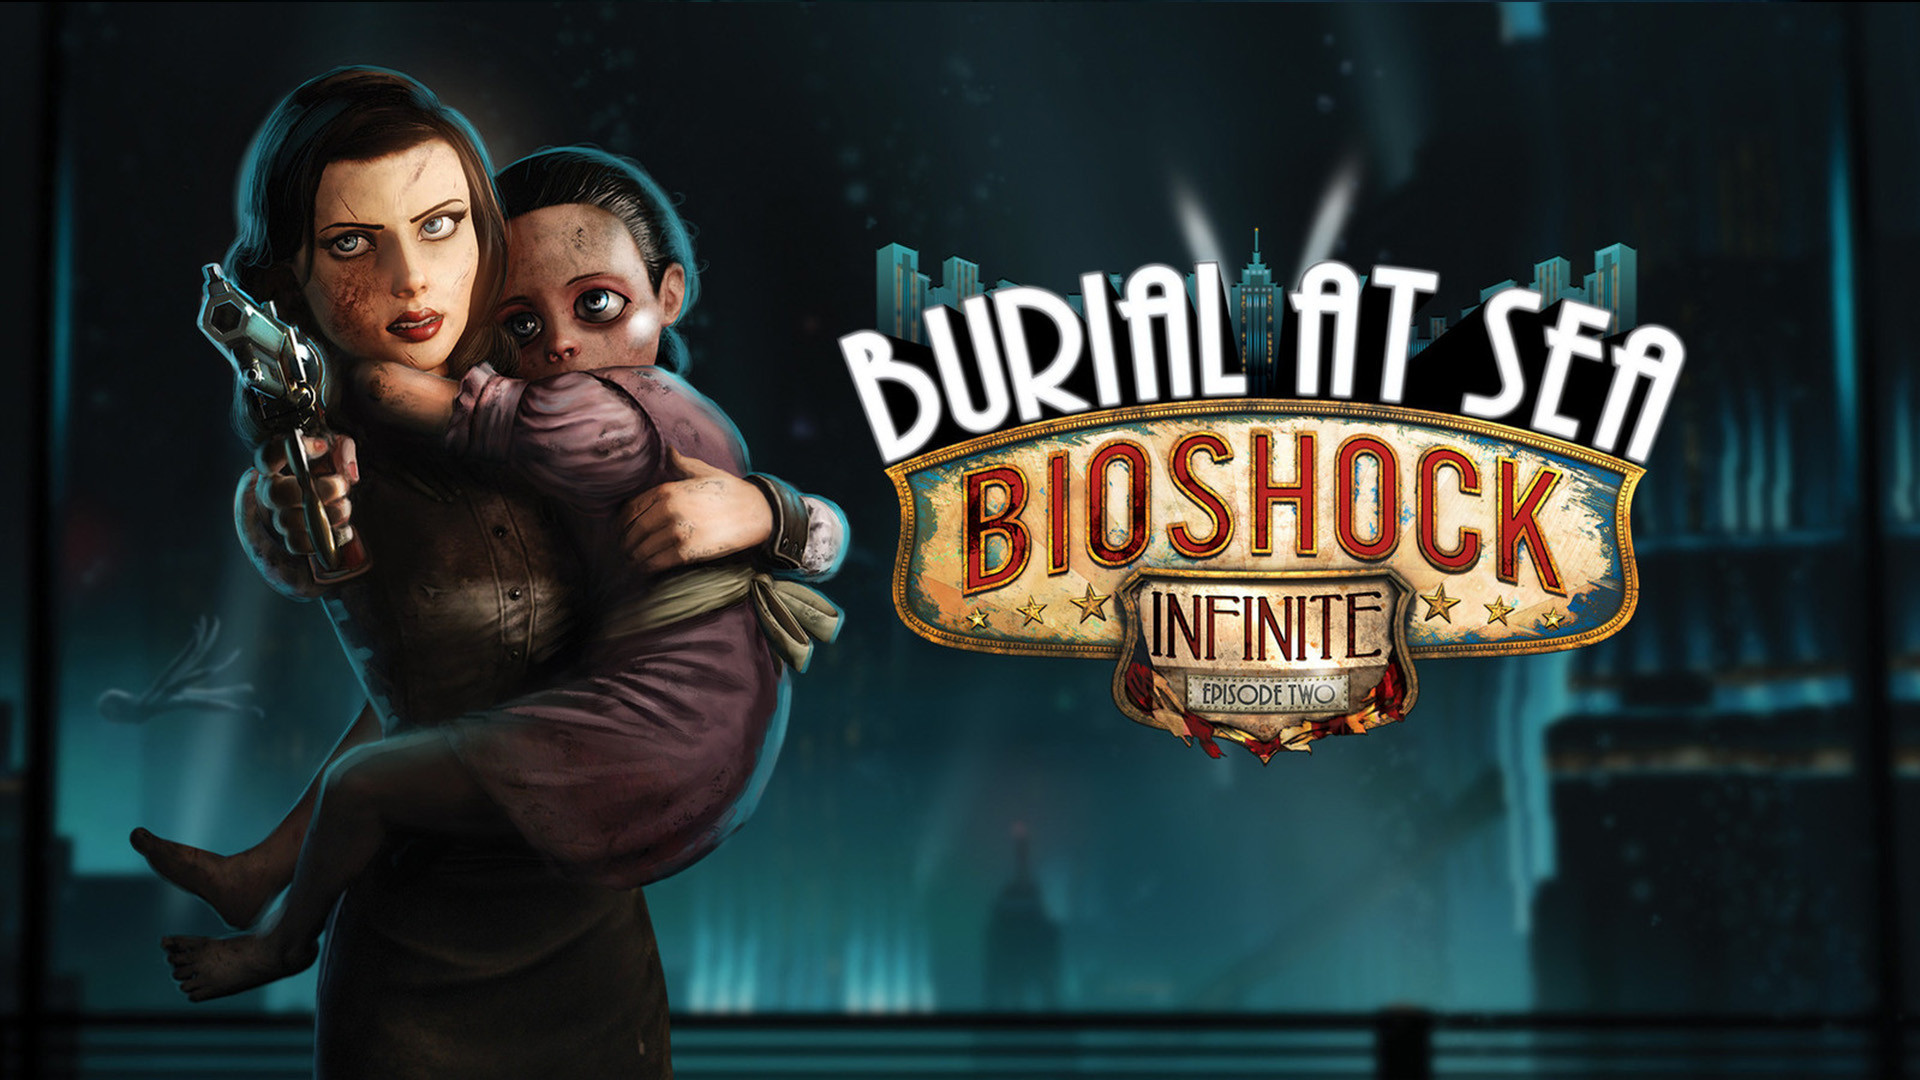 1920x1080 ... BioShock Infinite: Burial at Sea - Episode 2 - Fanart - Background ...